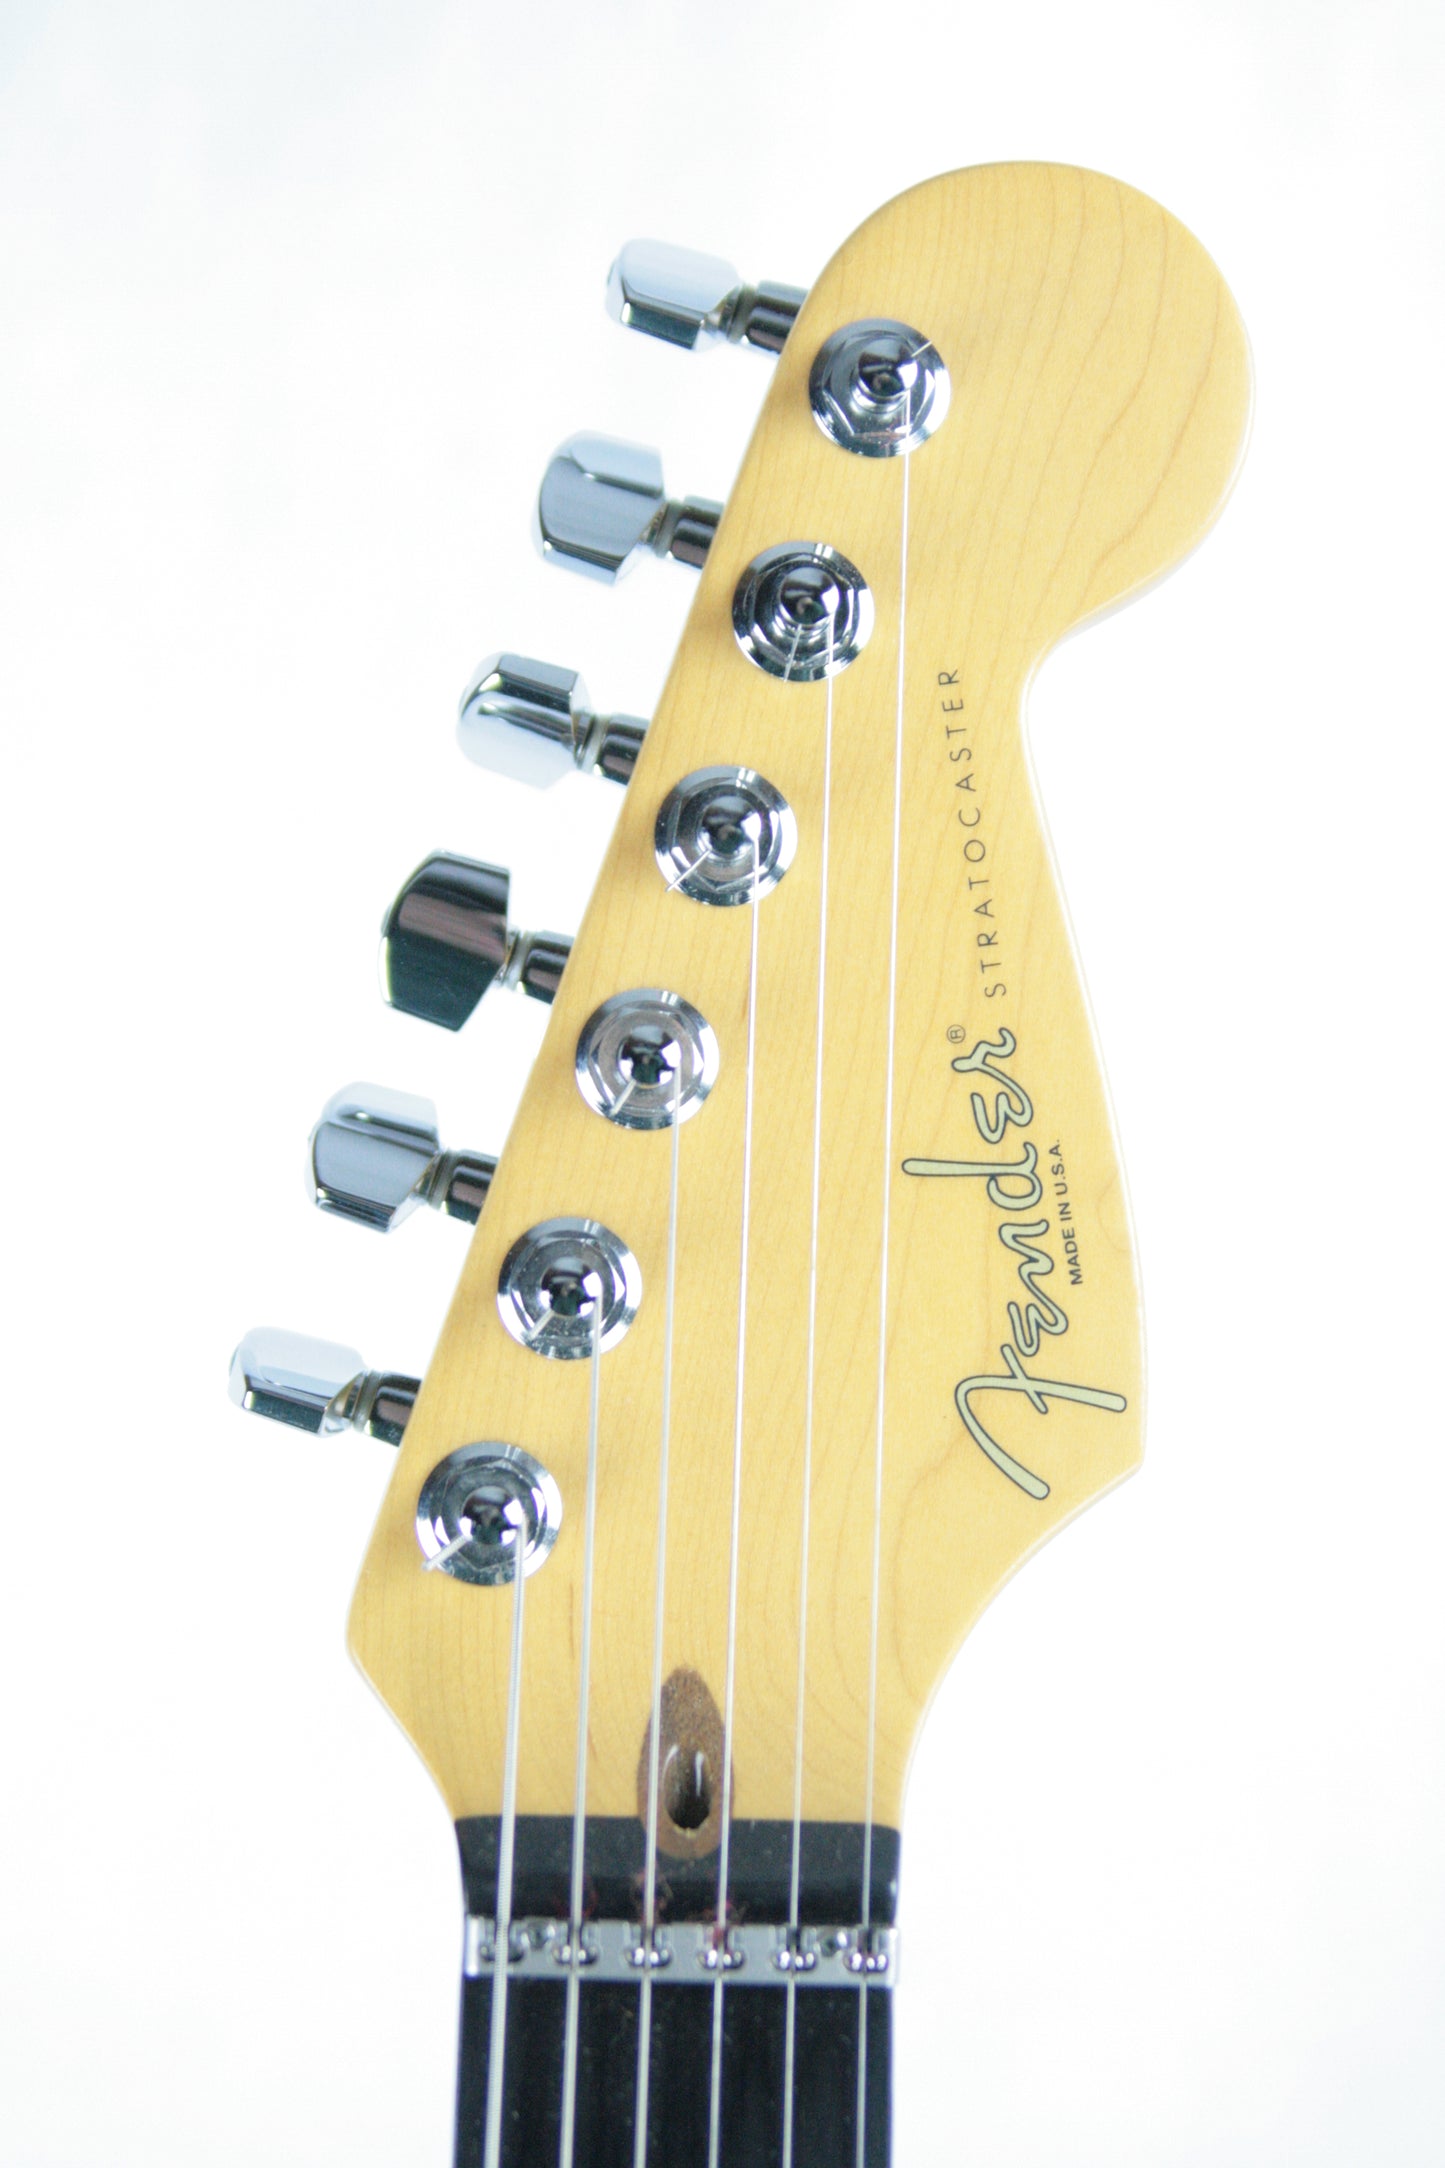 1997 Fender USA Stratocaster ULTRA Flametop! Ebony Board! American Strat